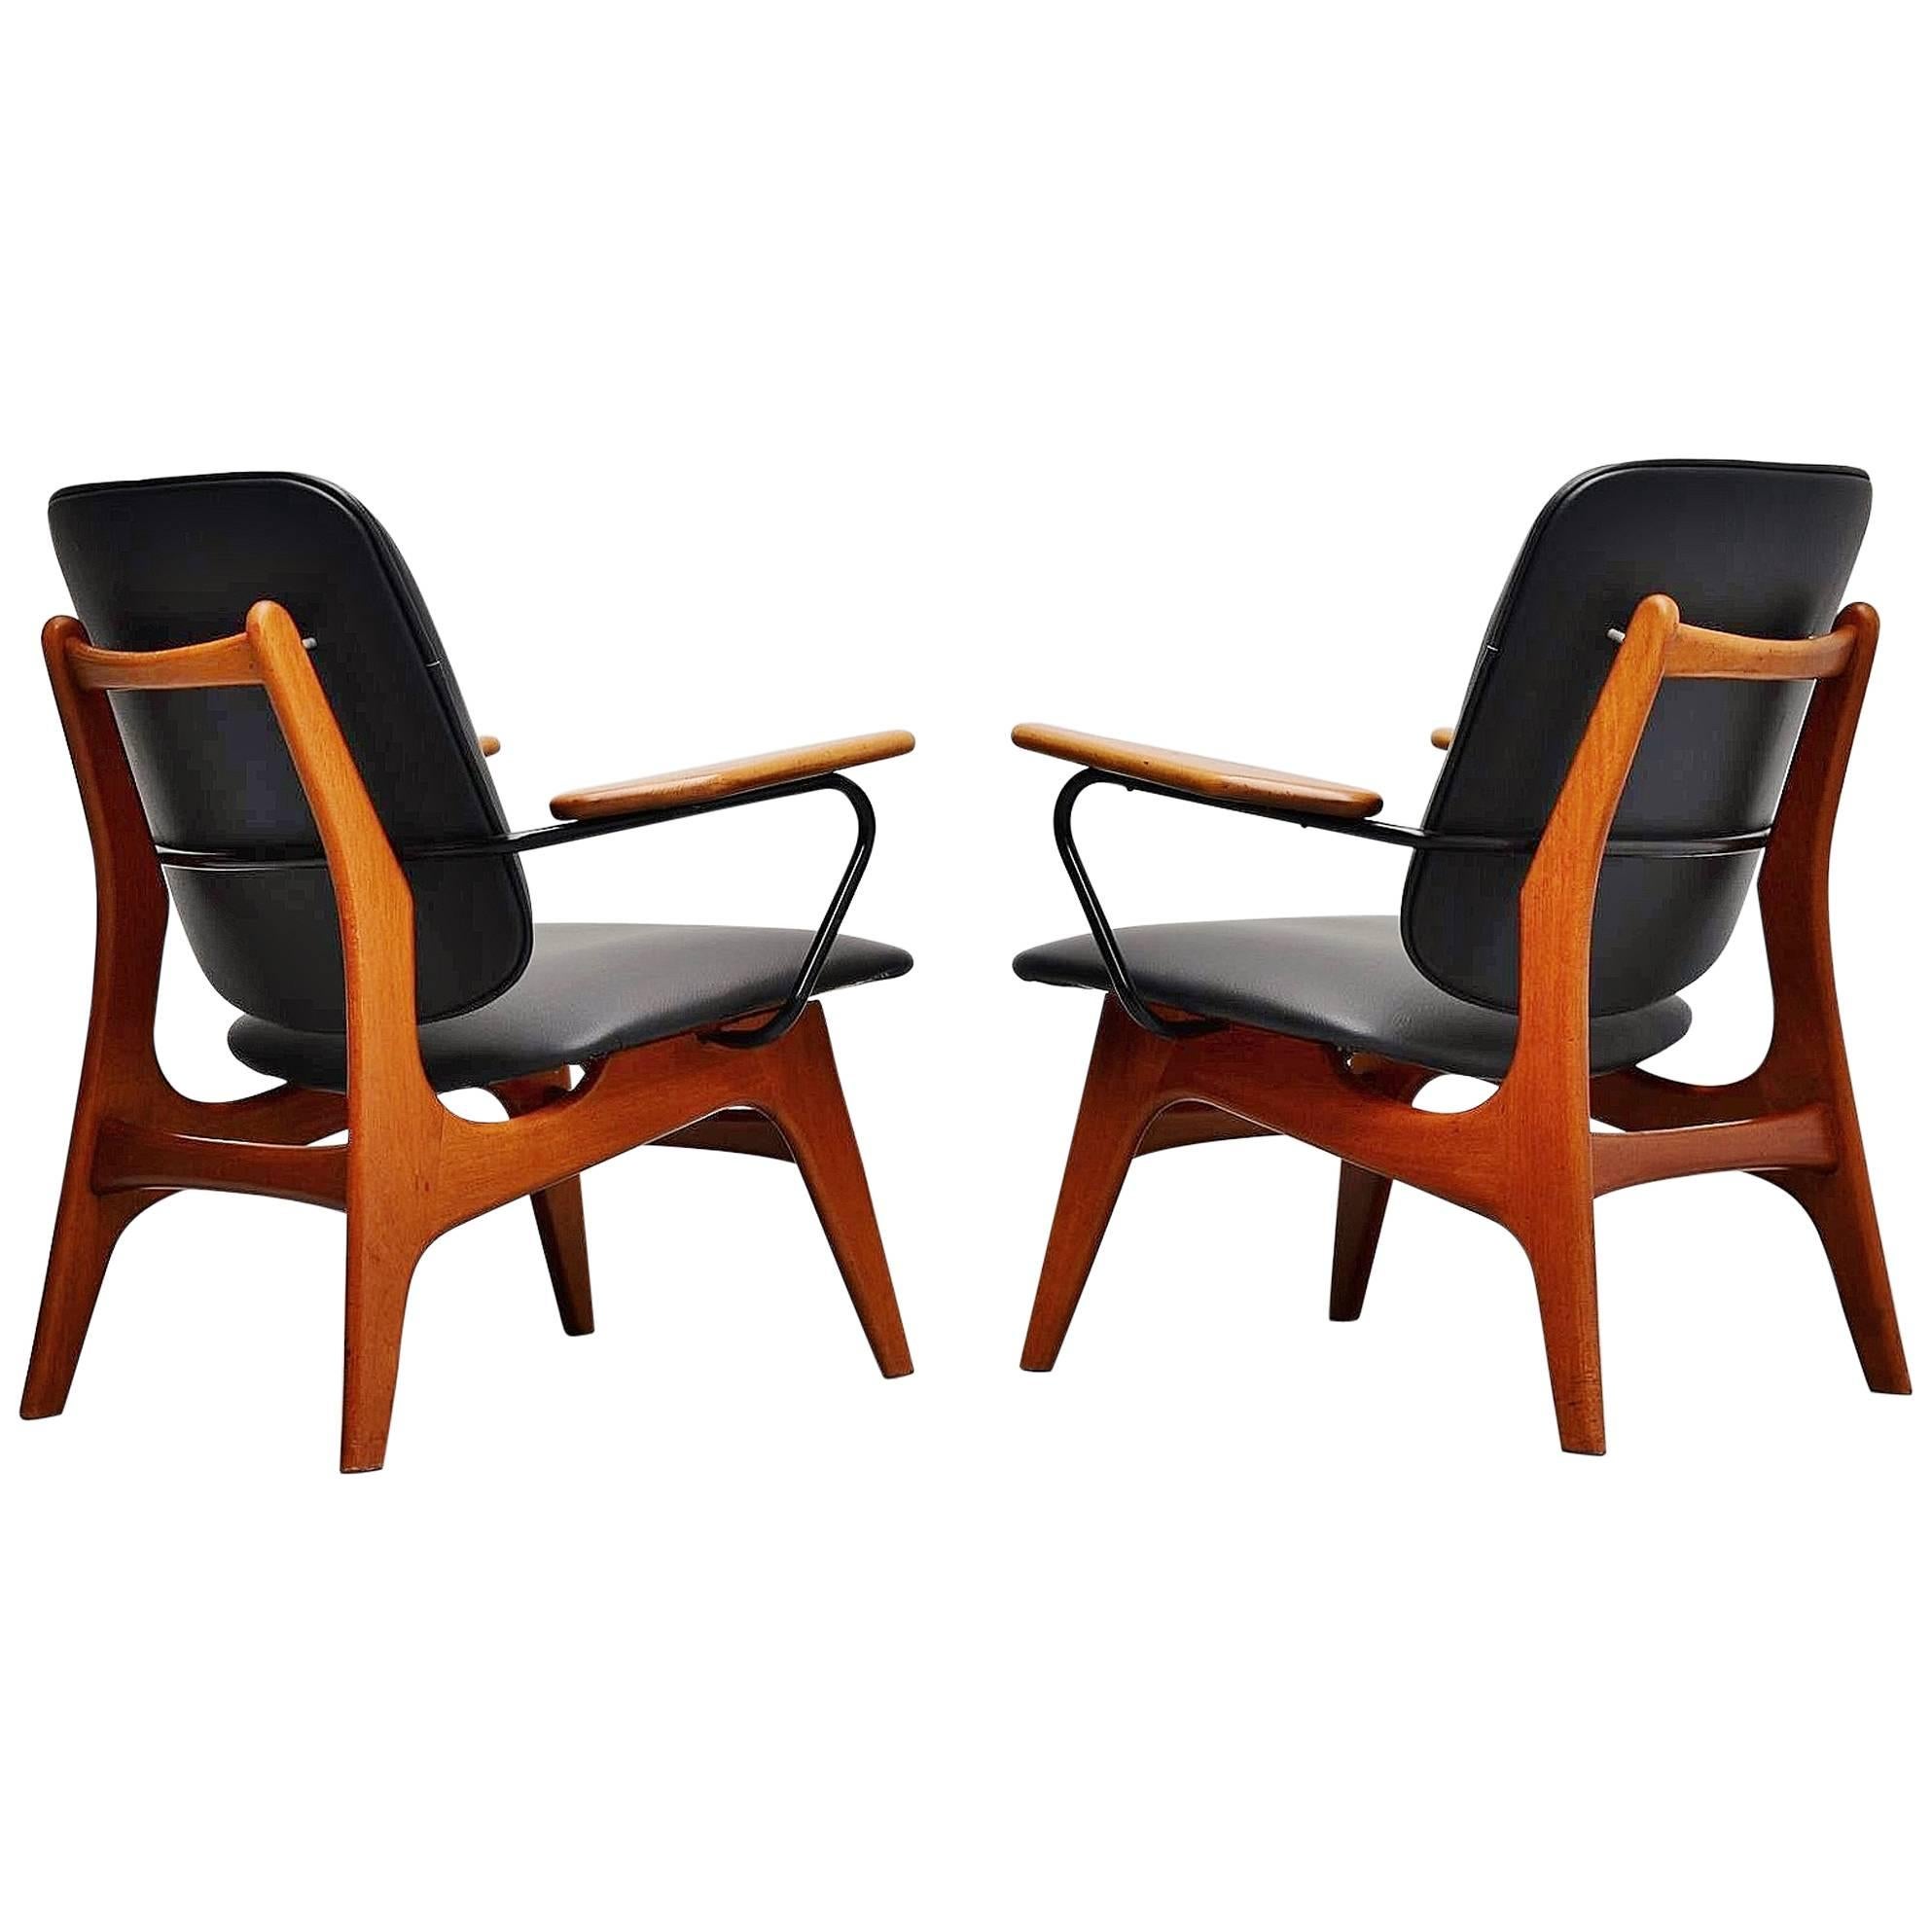 Pair of Dutch Modernist Lounge Chair, Holland, 1960